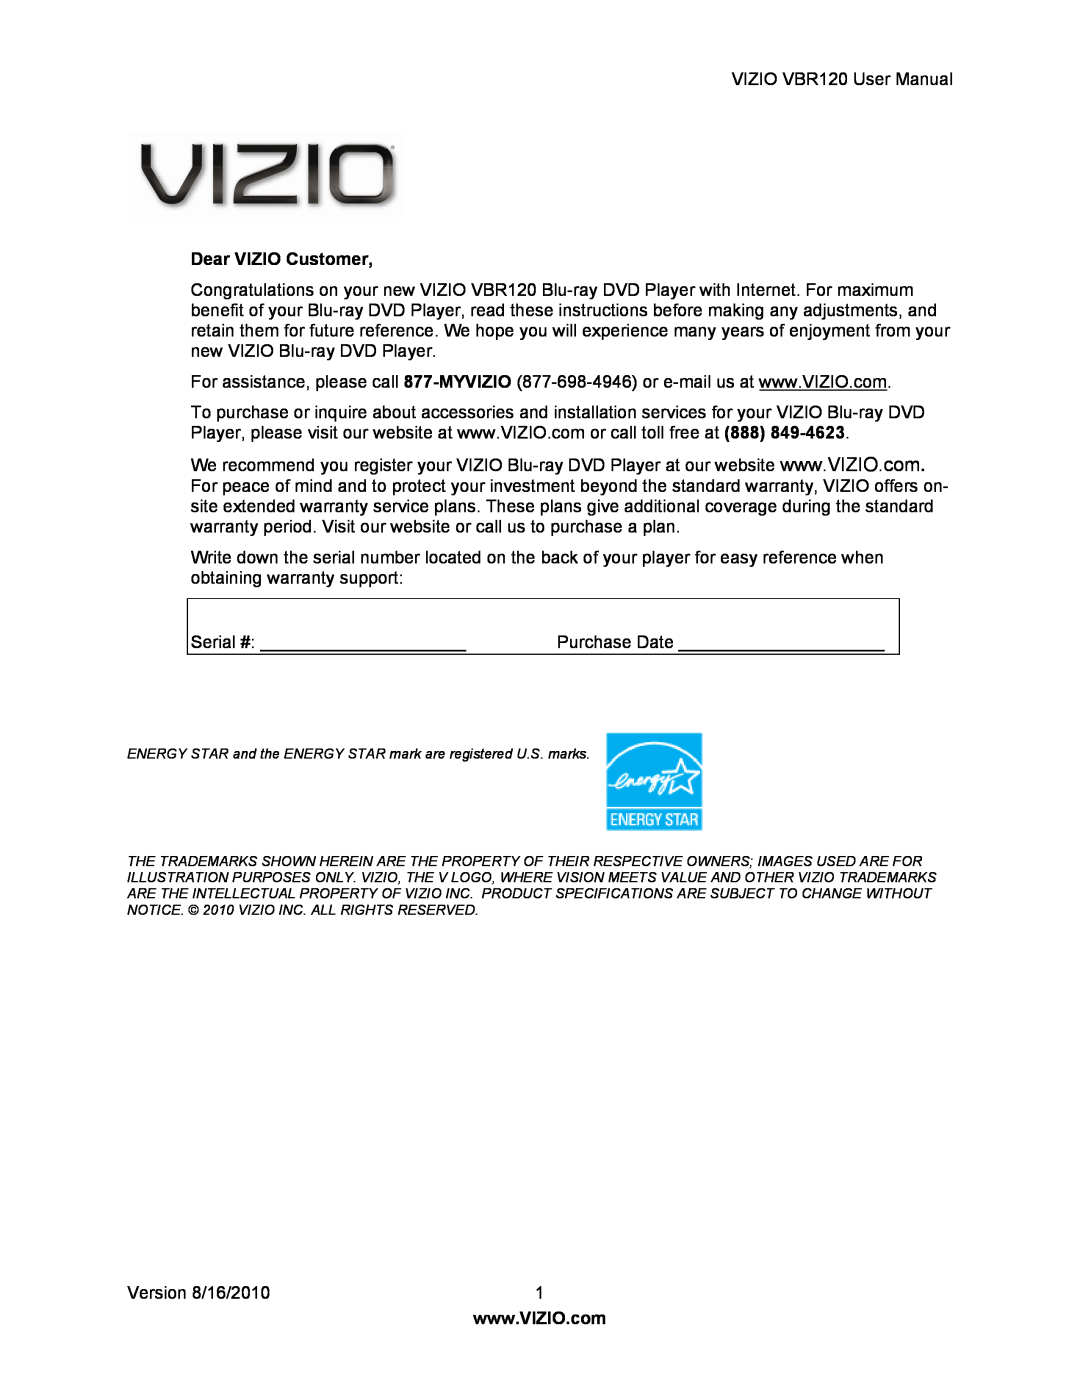 Vizio VBR 120 user manual Dear VIZIO Customer 